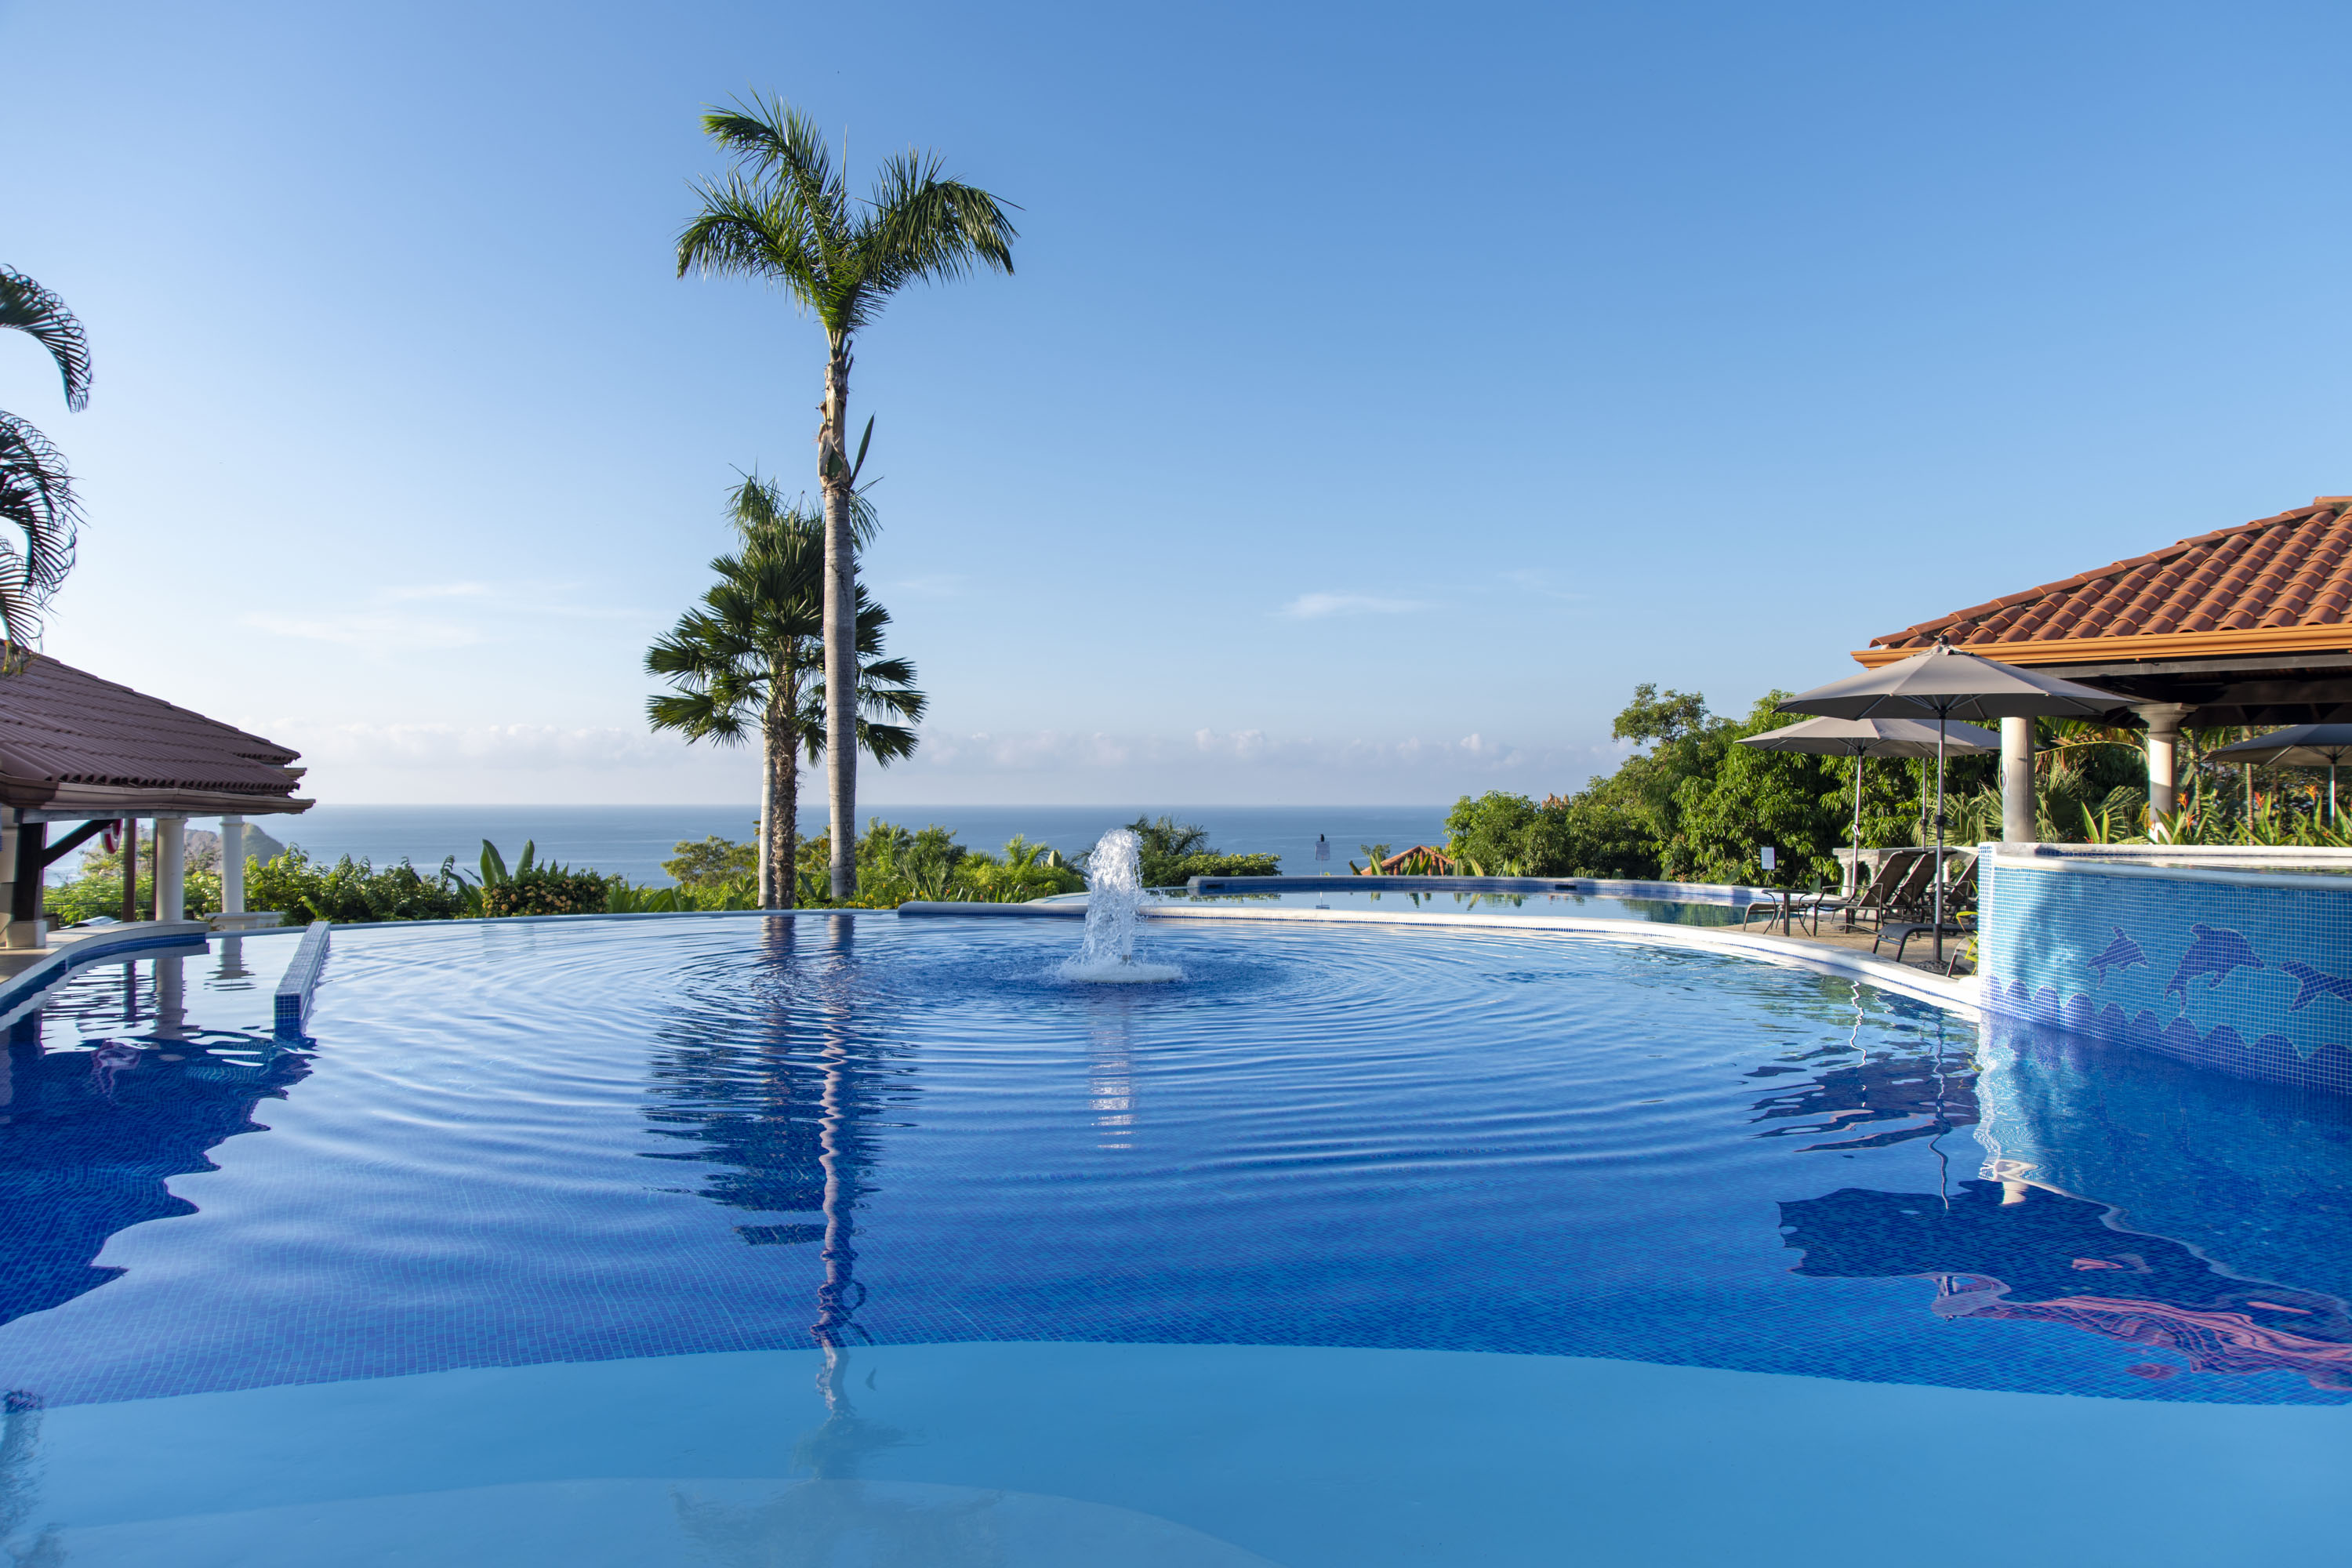 Swimming Pool at the Hotel Park Inn by Radisson San Jose, Costa Rica, Llama Travel